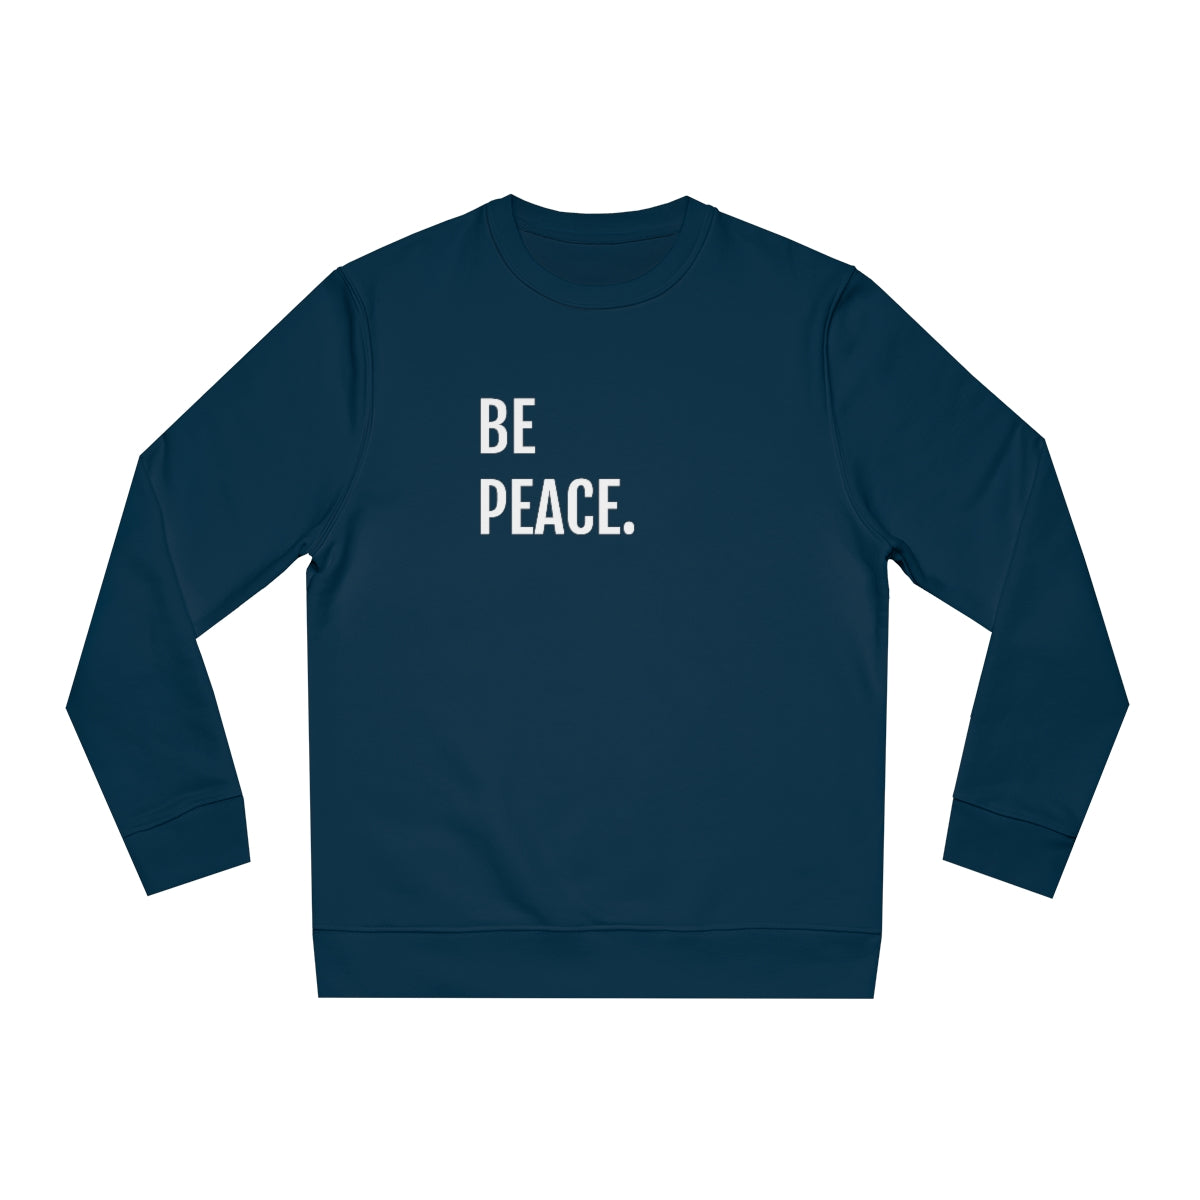 BE PEACE. - Unisex Crewneck